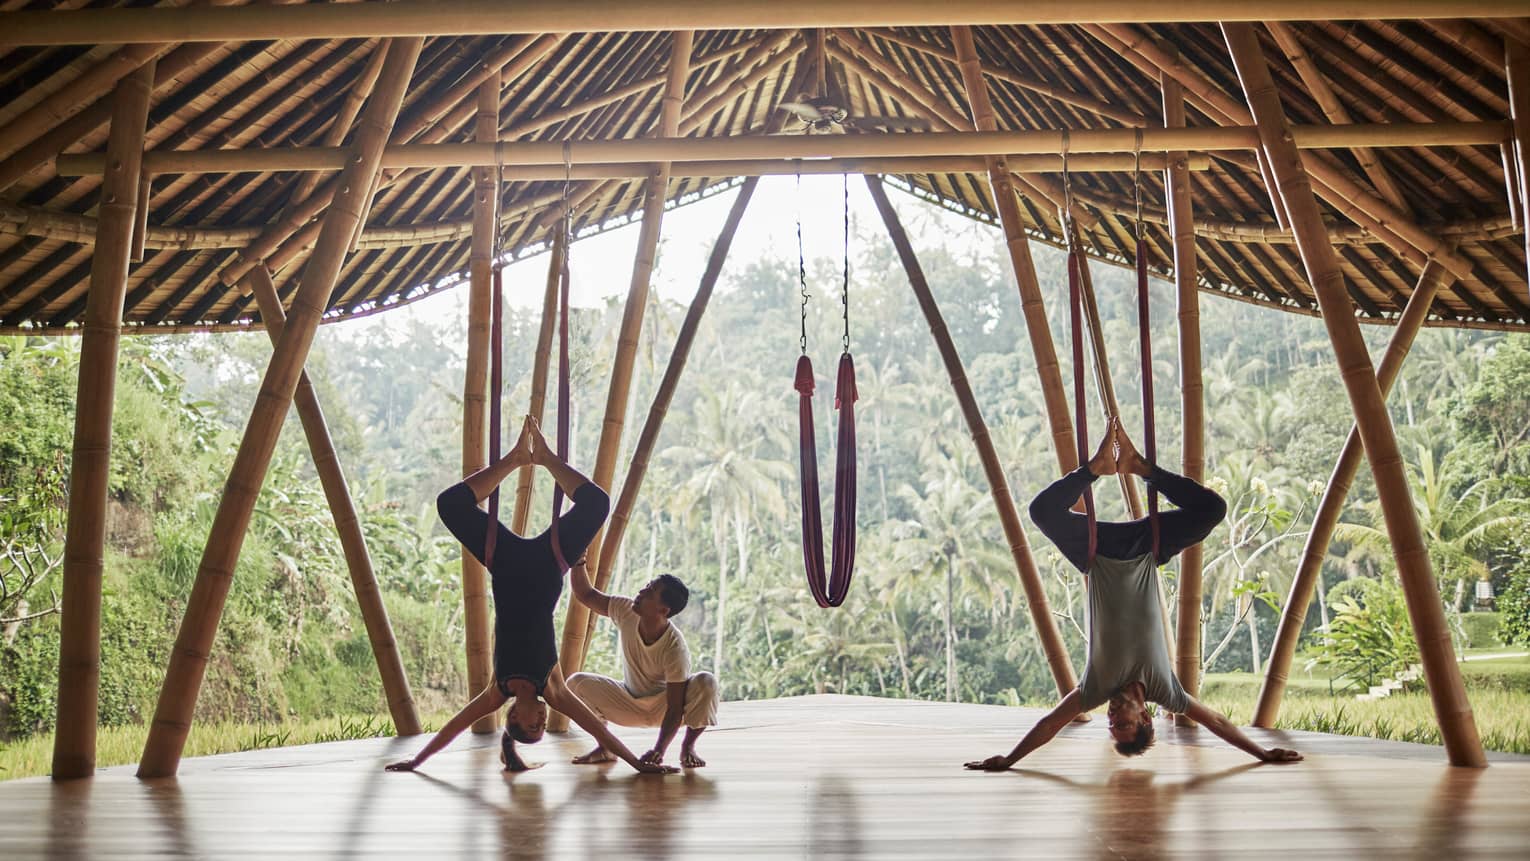 Antigravity Yoga at a yoga pavilion in Bali